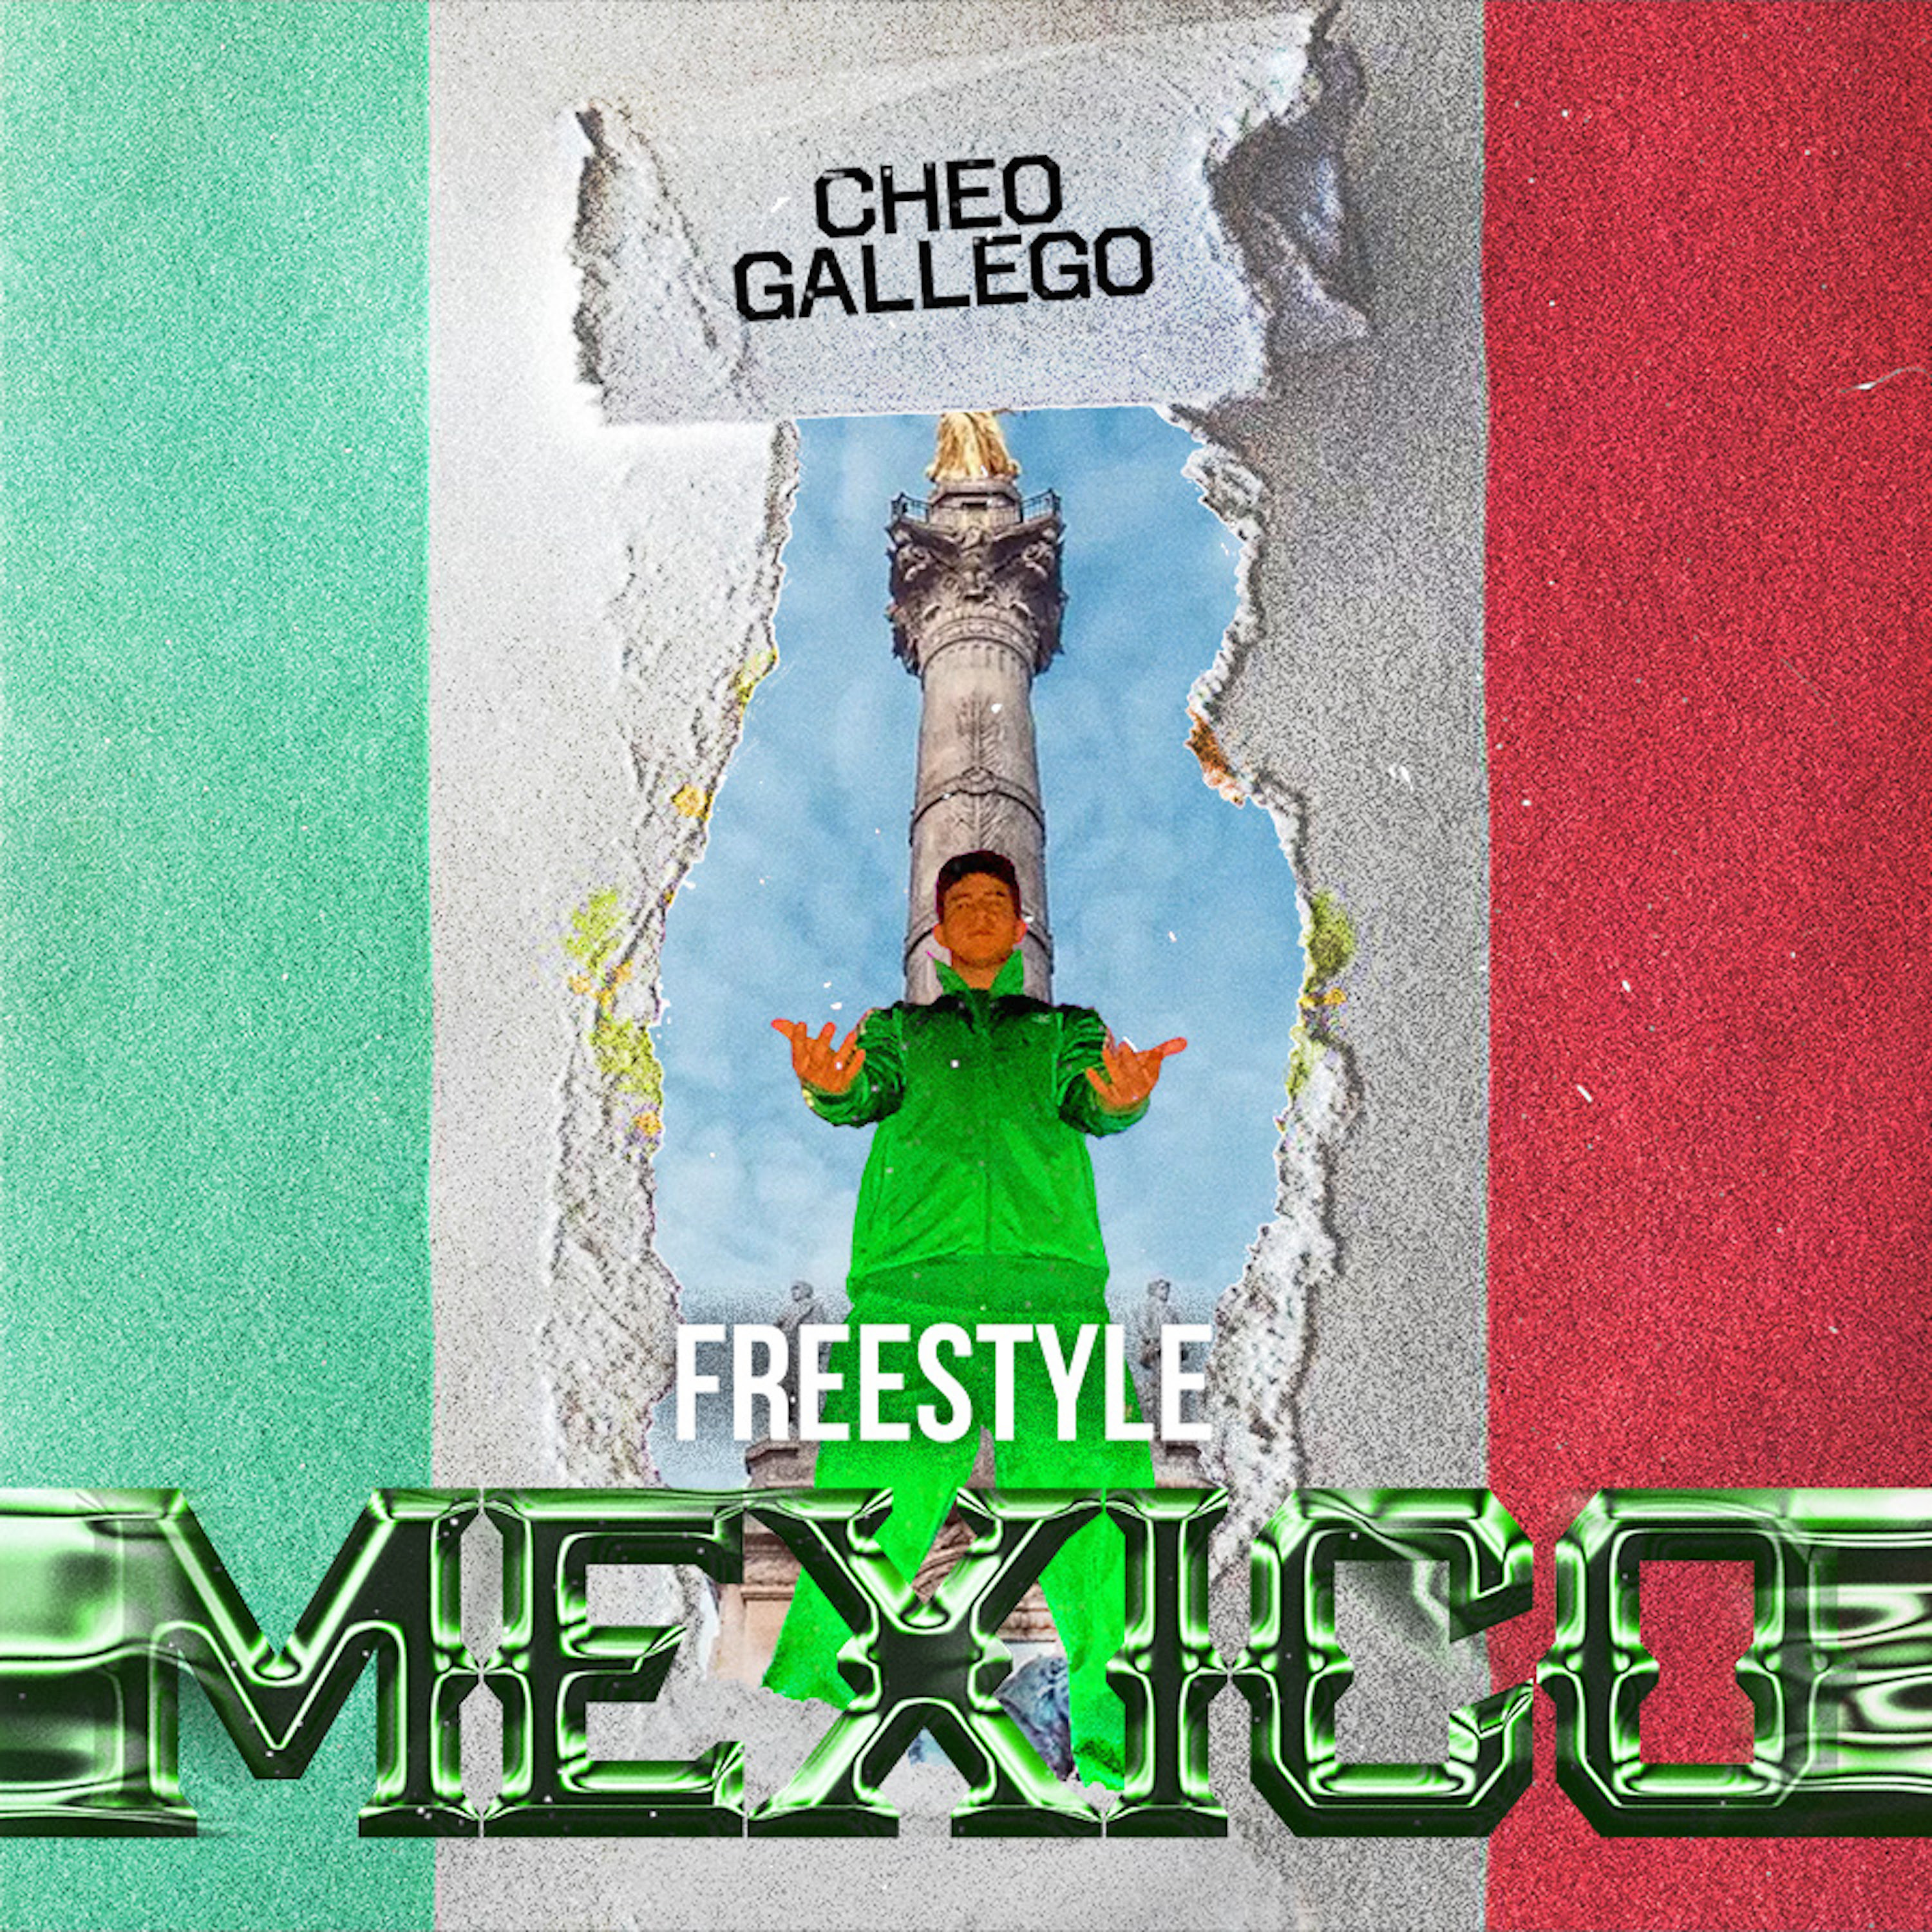 Homenaje de Cheo Gallego a la cultura mexicana «Freestyle México»